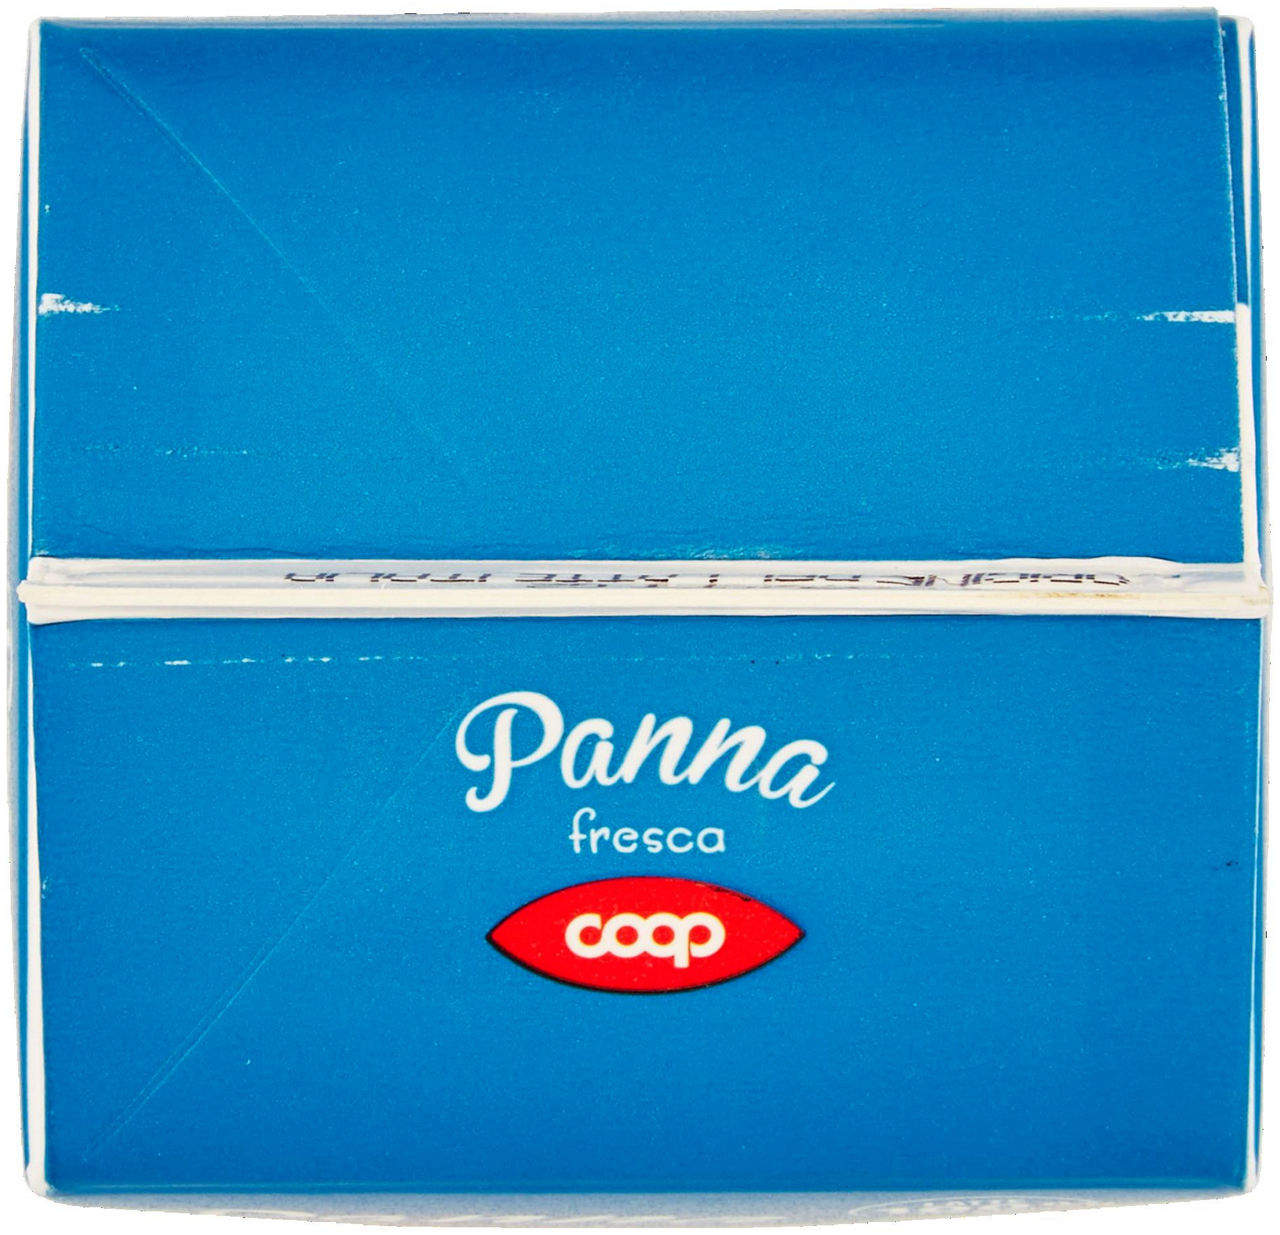 PANNA FRESCA COOP 500 ML - 4